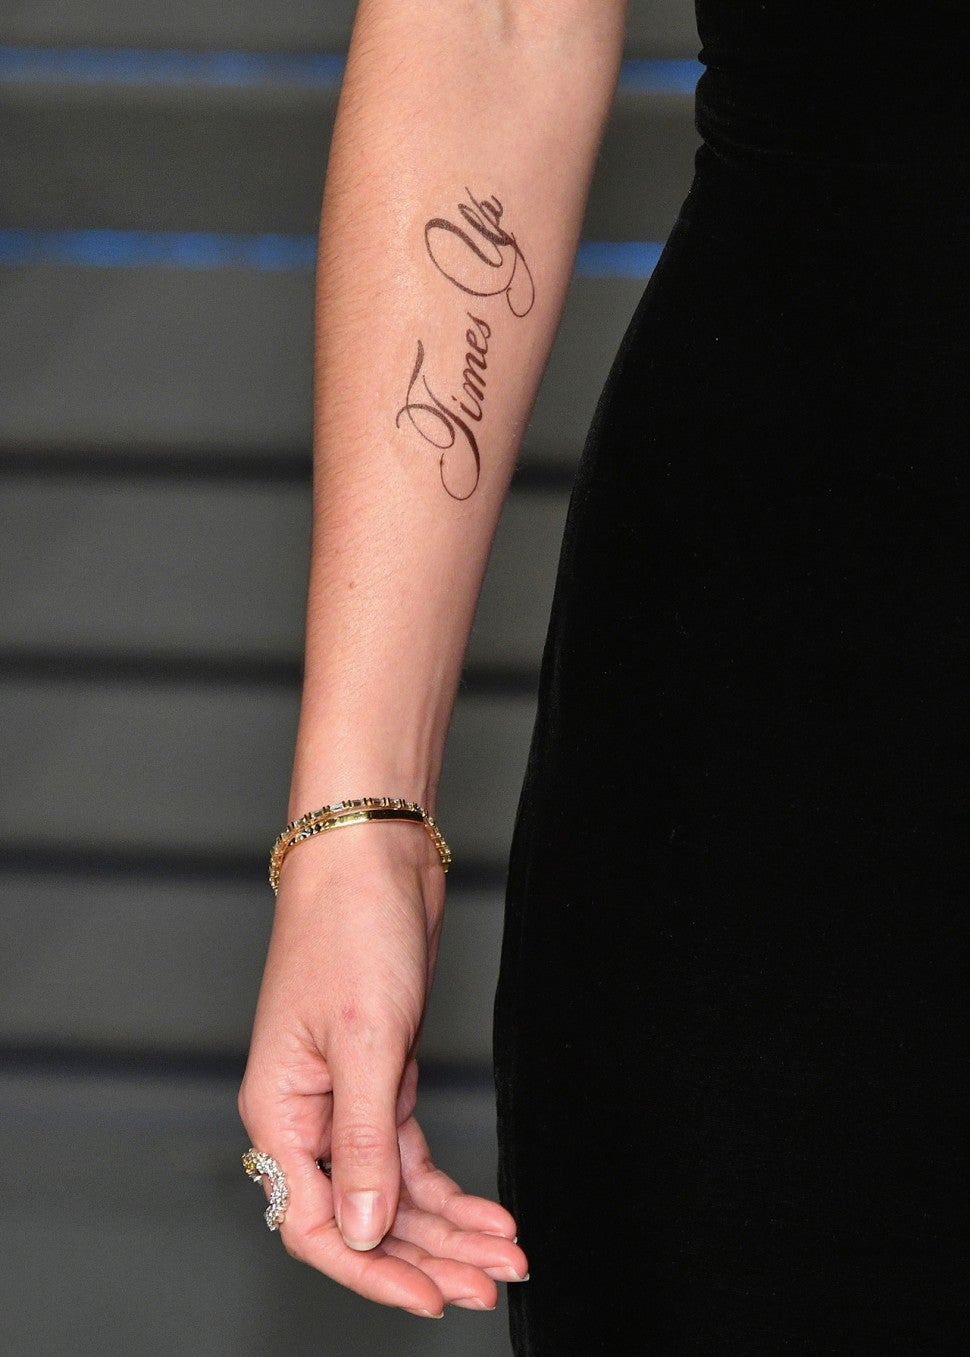 Emma Watson's Time's Up tattoo